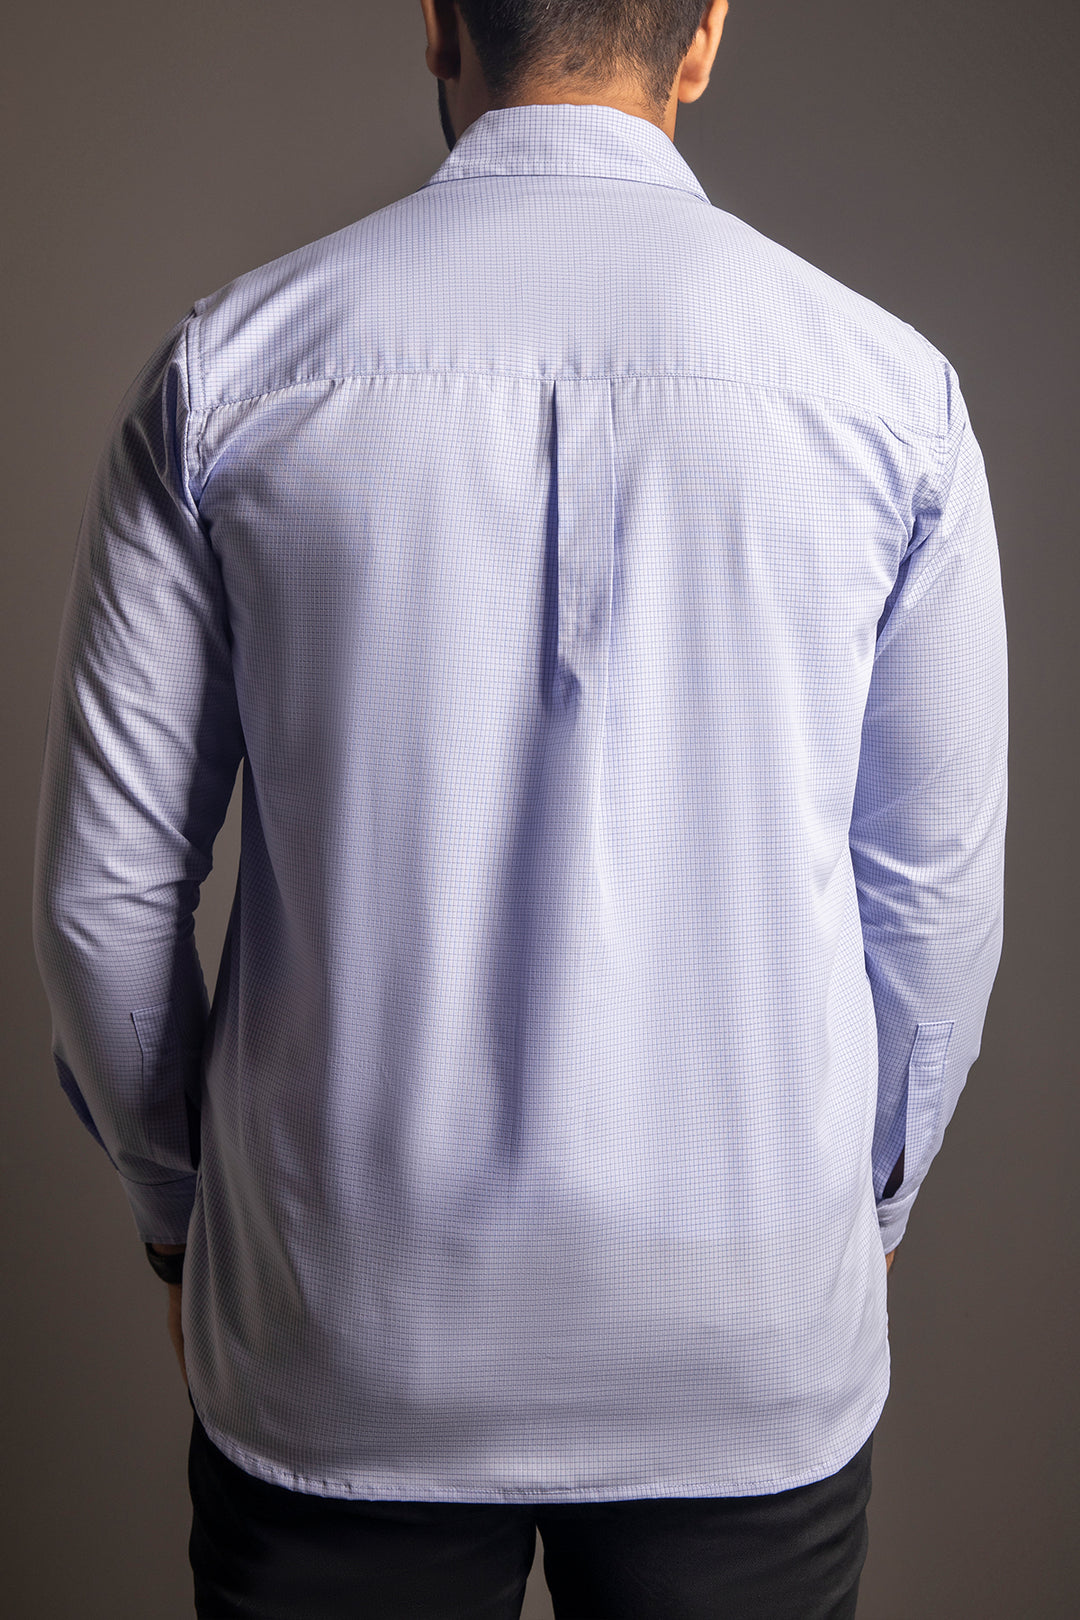 Blue Gingham Checkered Shirt - S22 - MS0042R